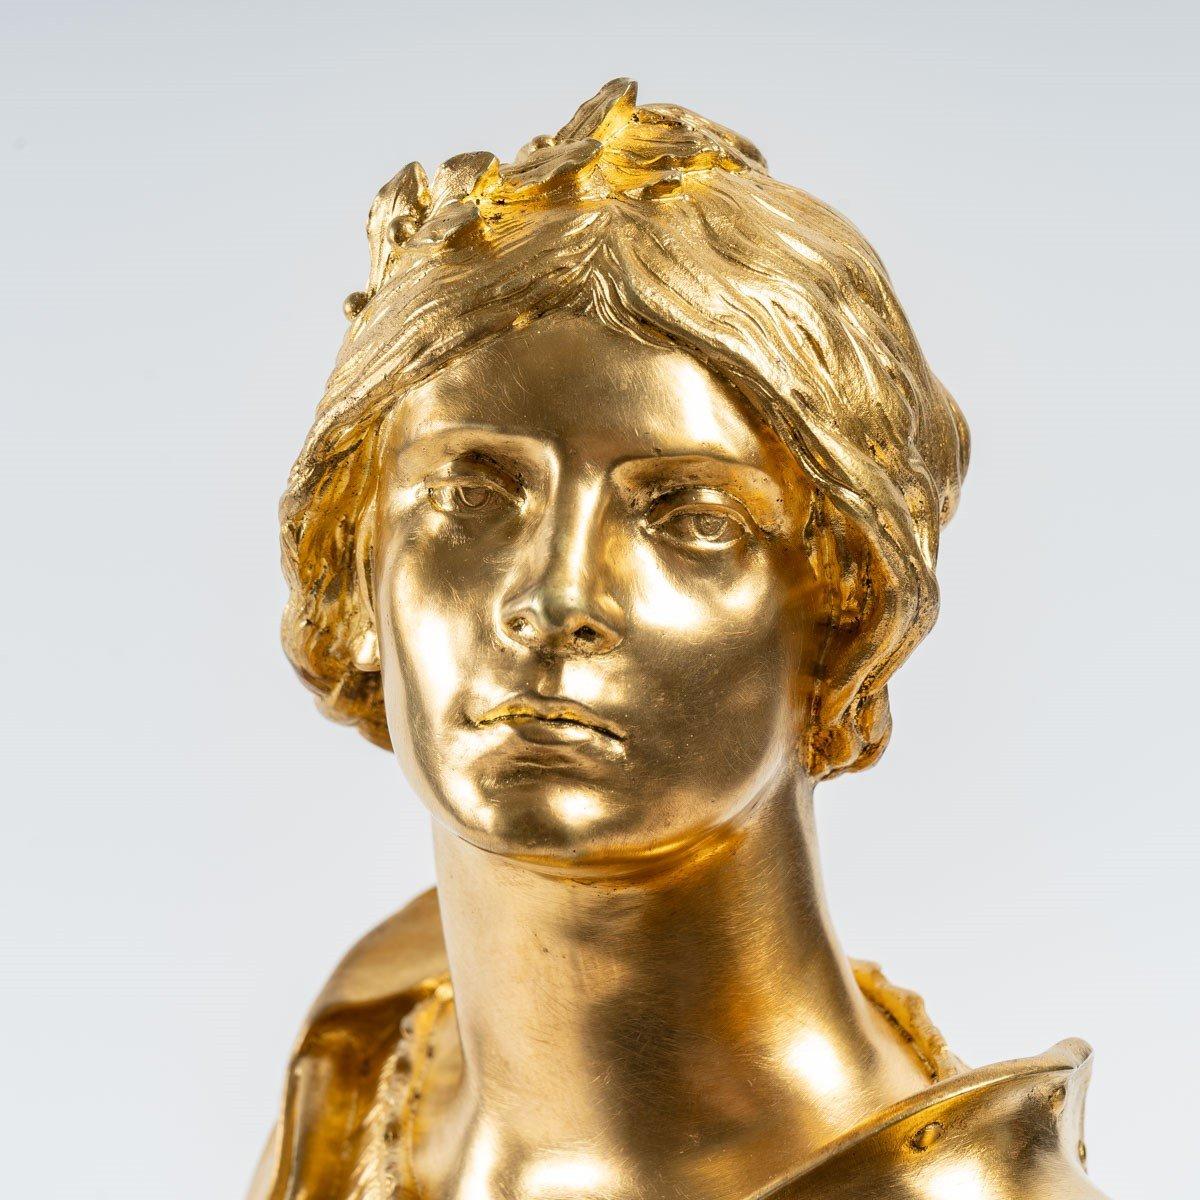 Bronze Sculpture of Joan of Arc by François Sicard in gilded bronze